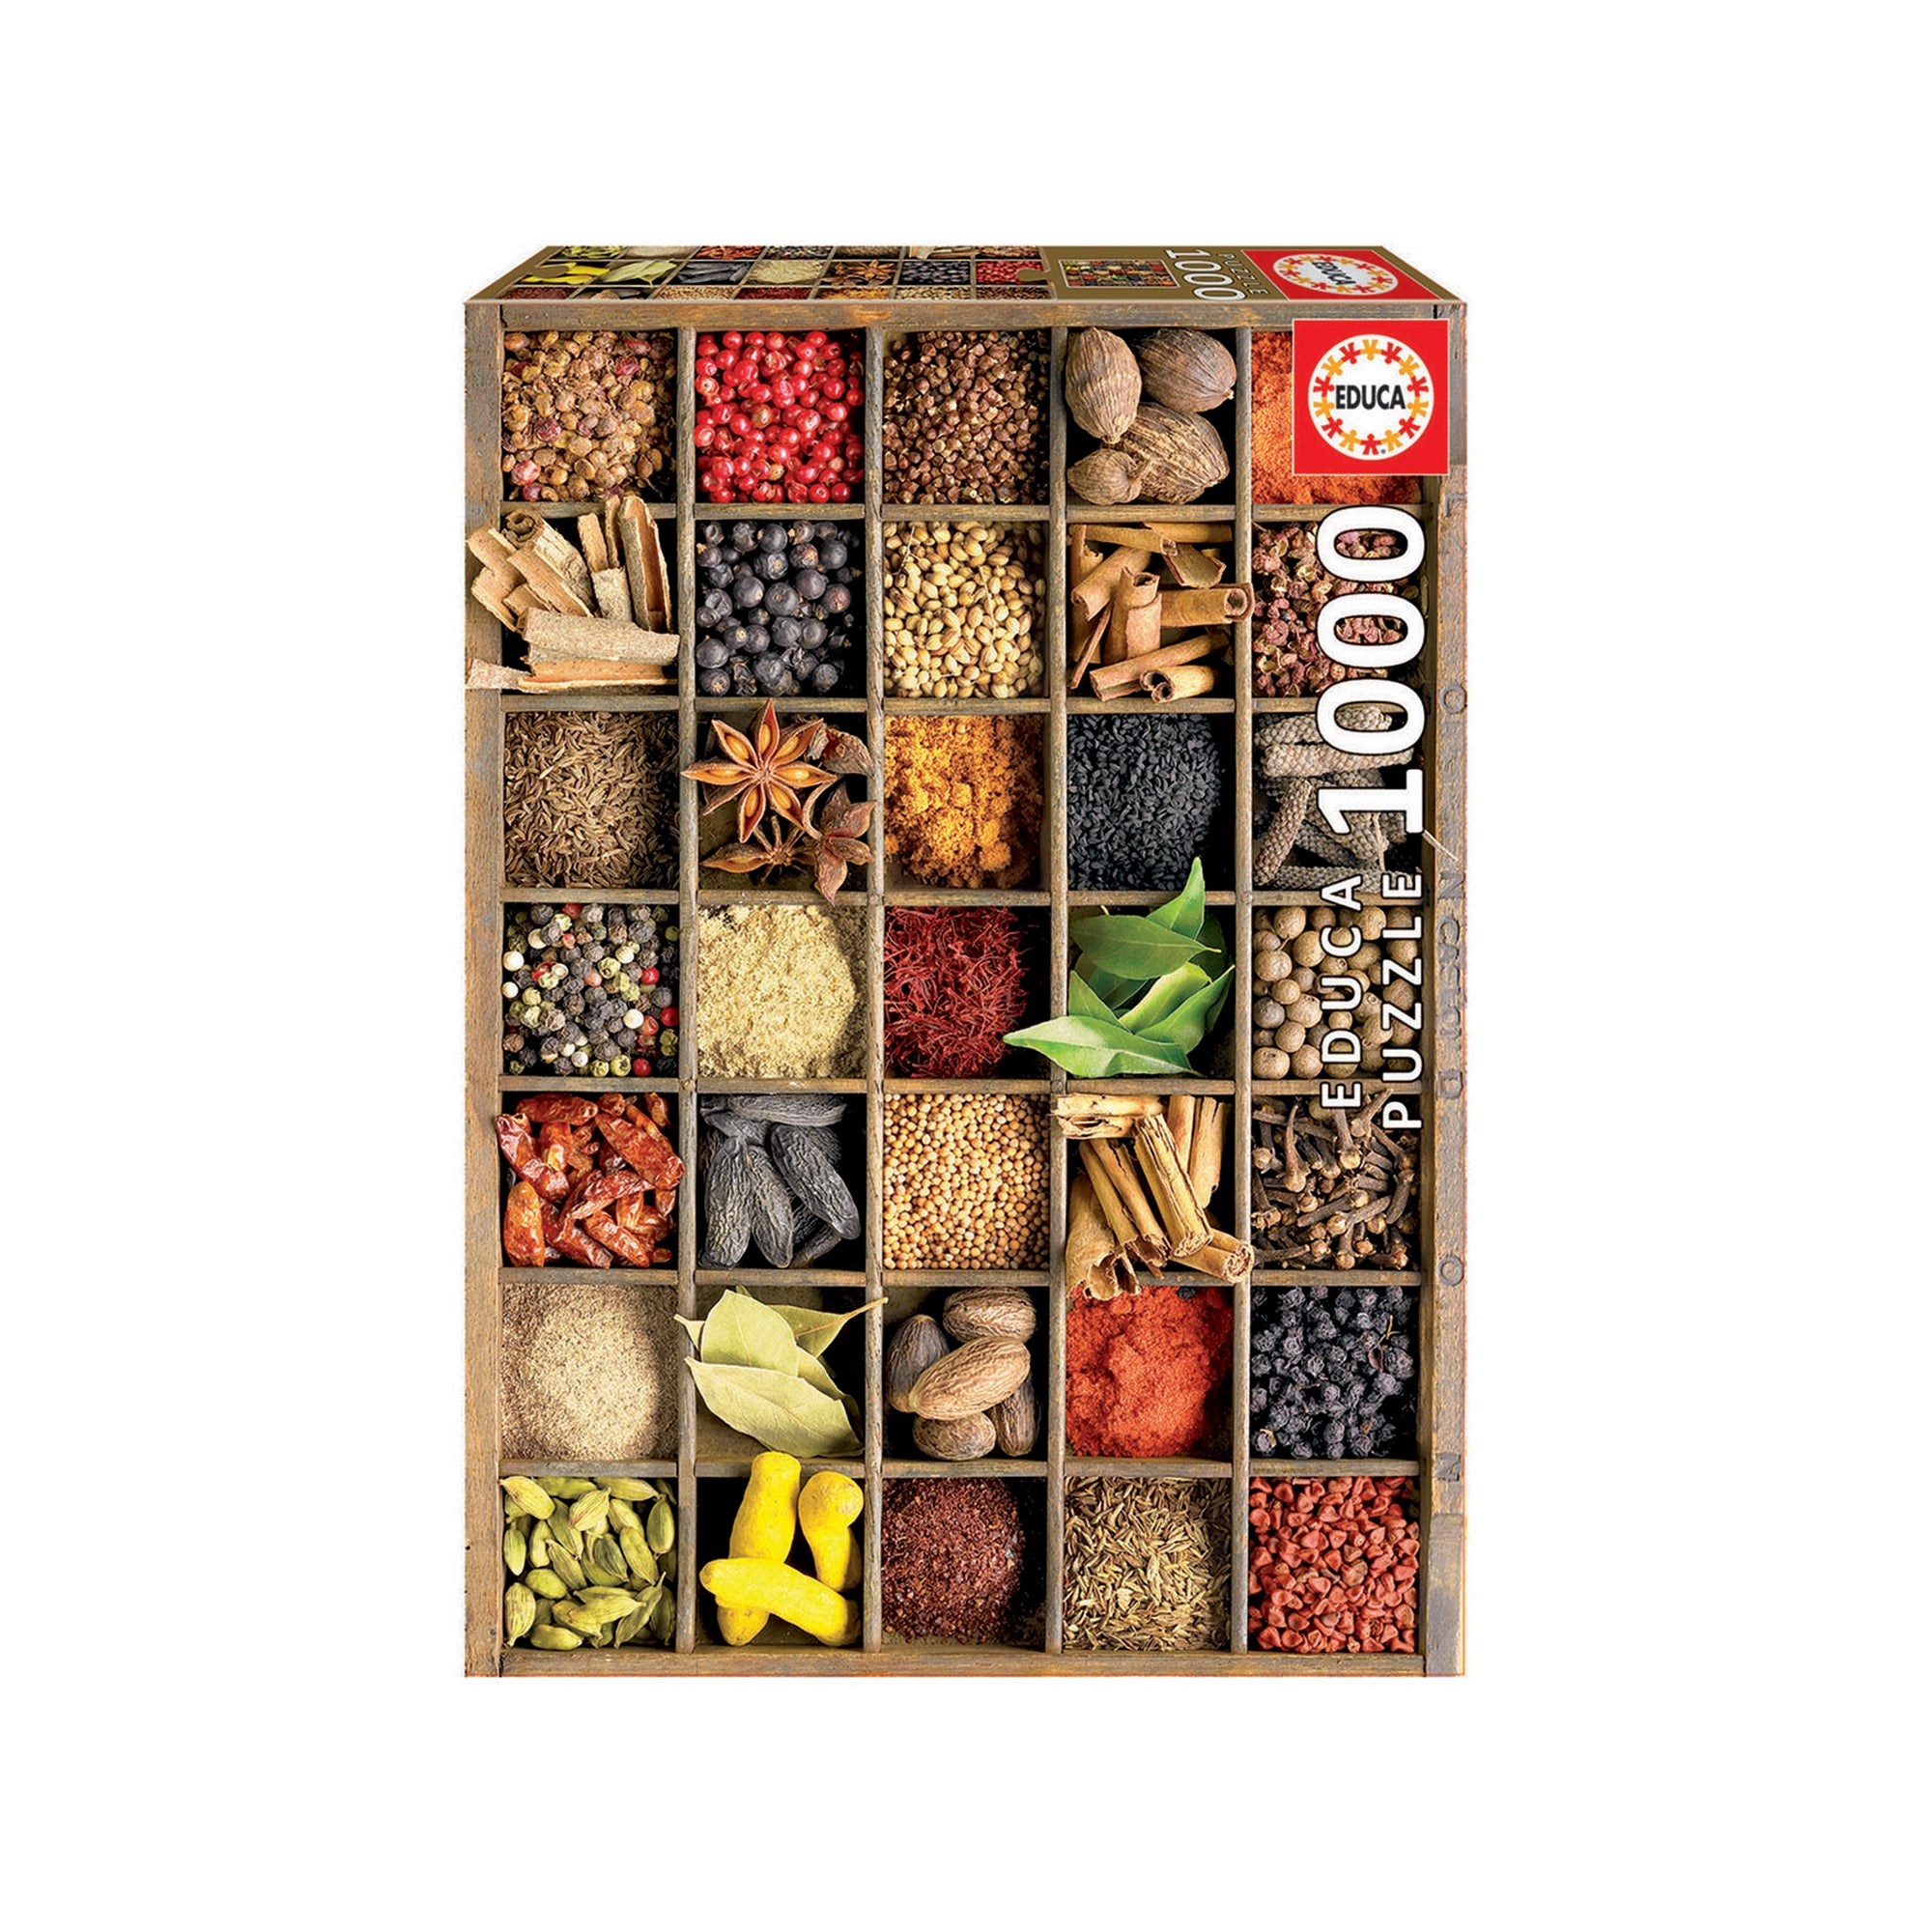 Educa Spices 1000 Piece Puzzle